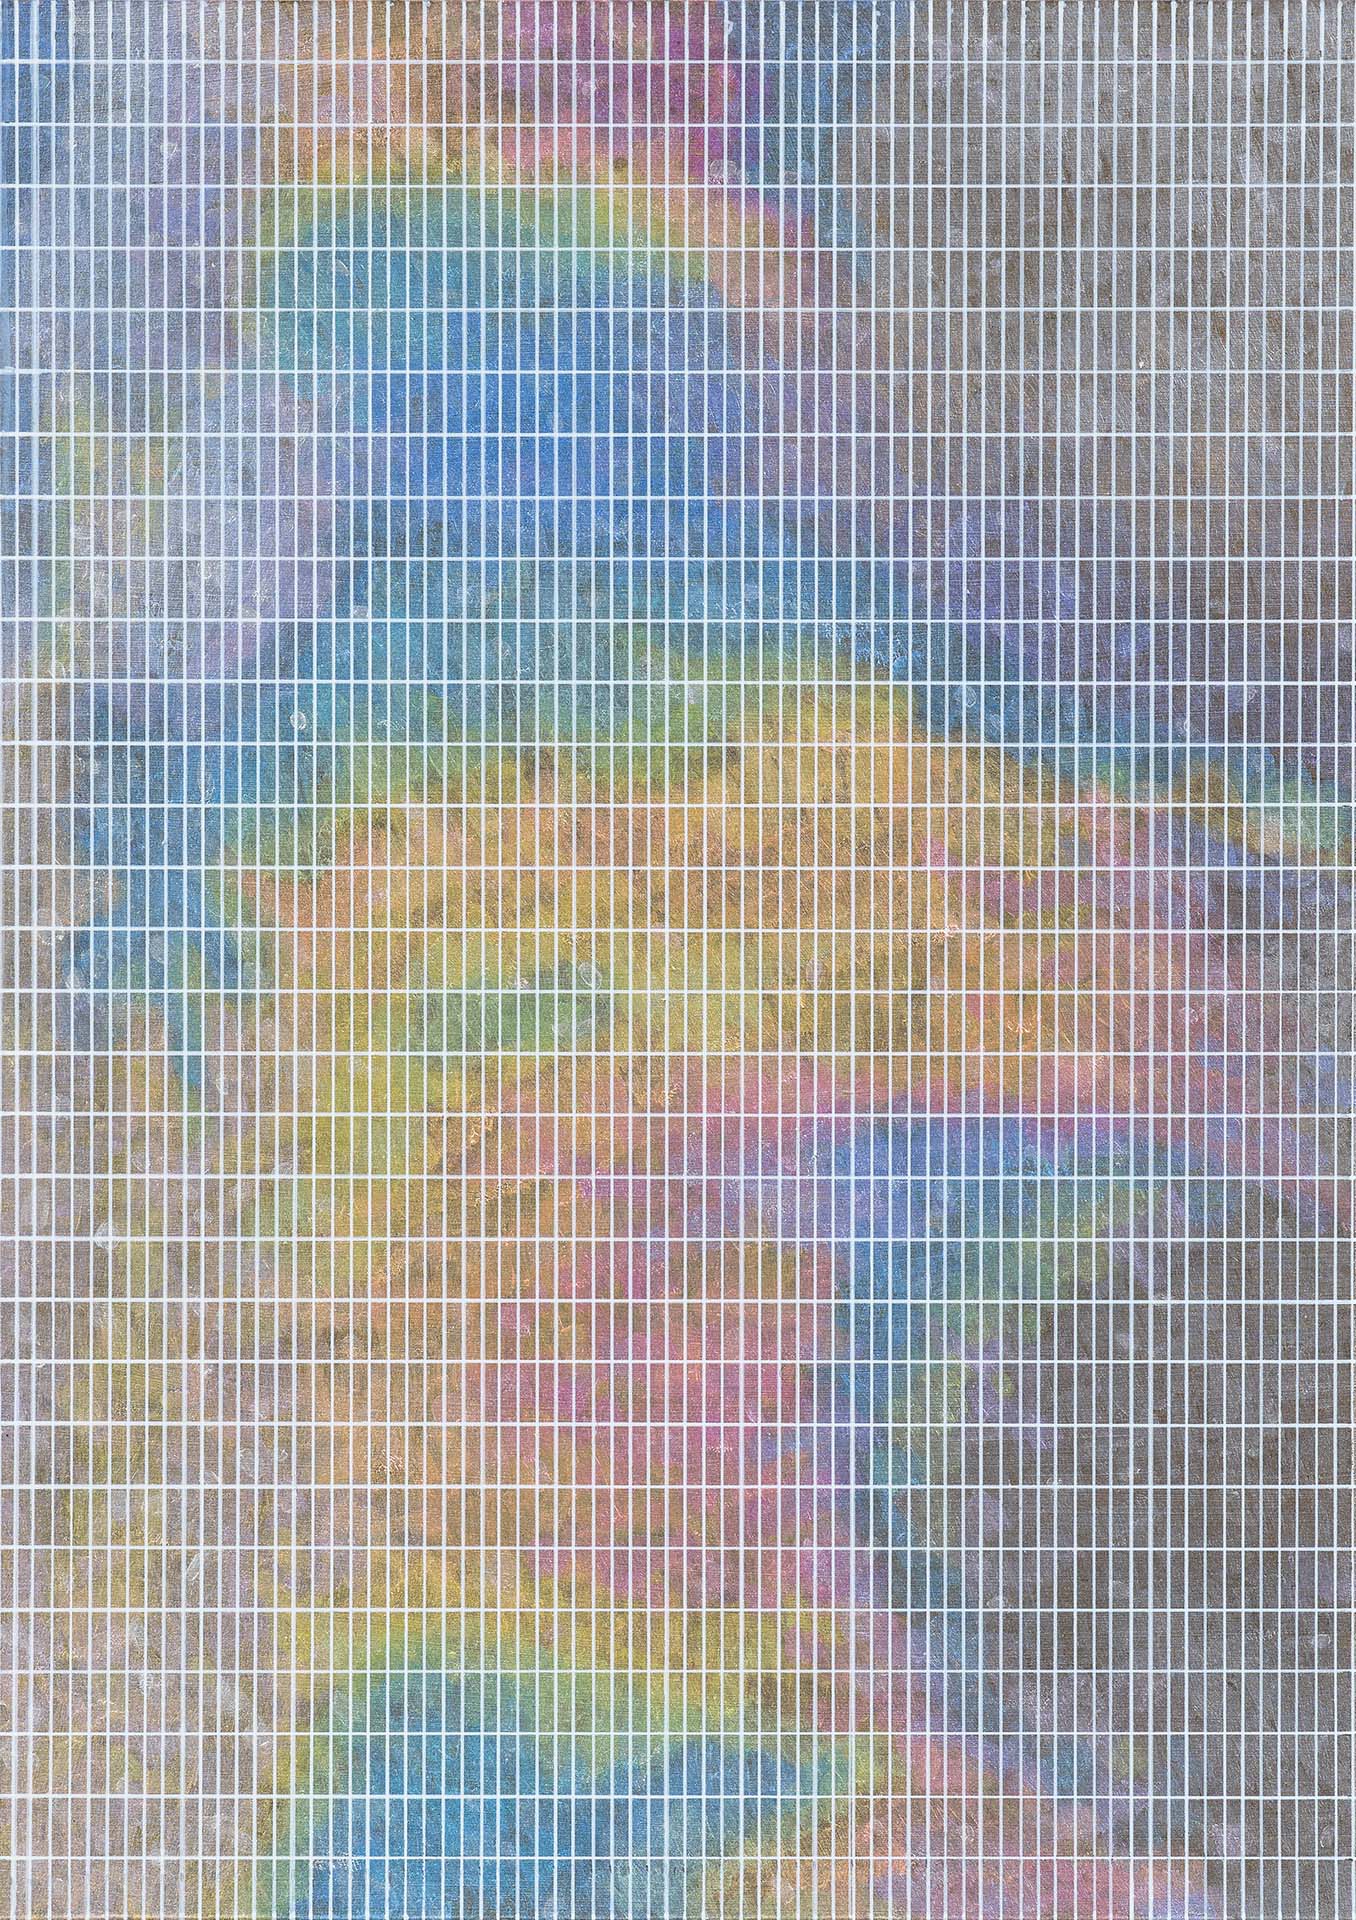 Oil Slick with Grid 3, 2020, acrylic on bristol board, 310 x 220mm. Photo: Sam Hartnett